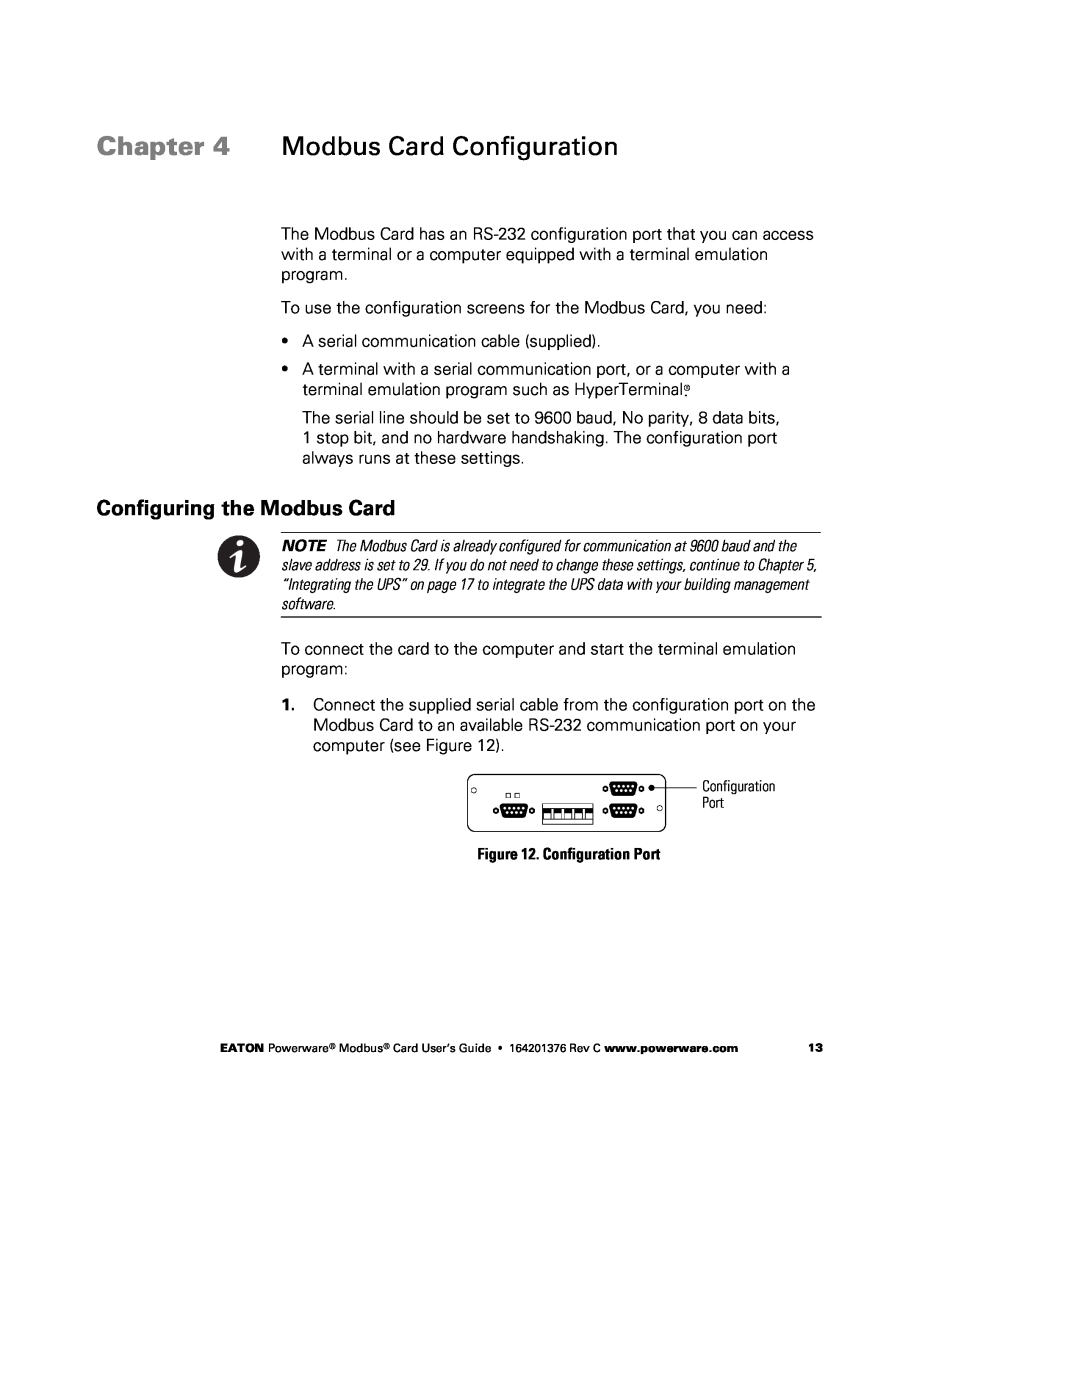 Powerware FCC 15 manual Modbus Card Configuration, Configuring the Modbus Card 